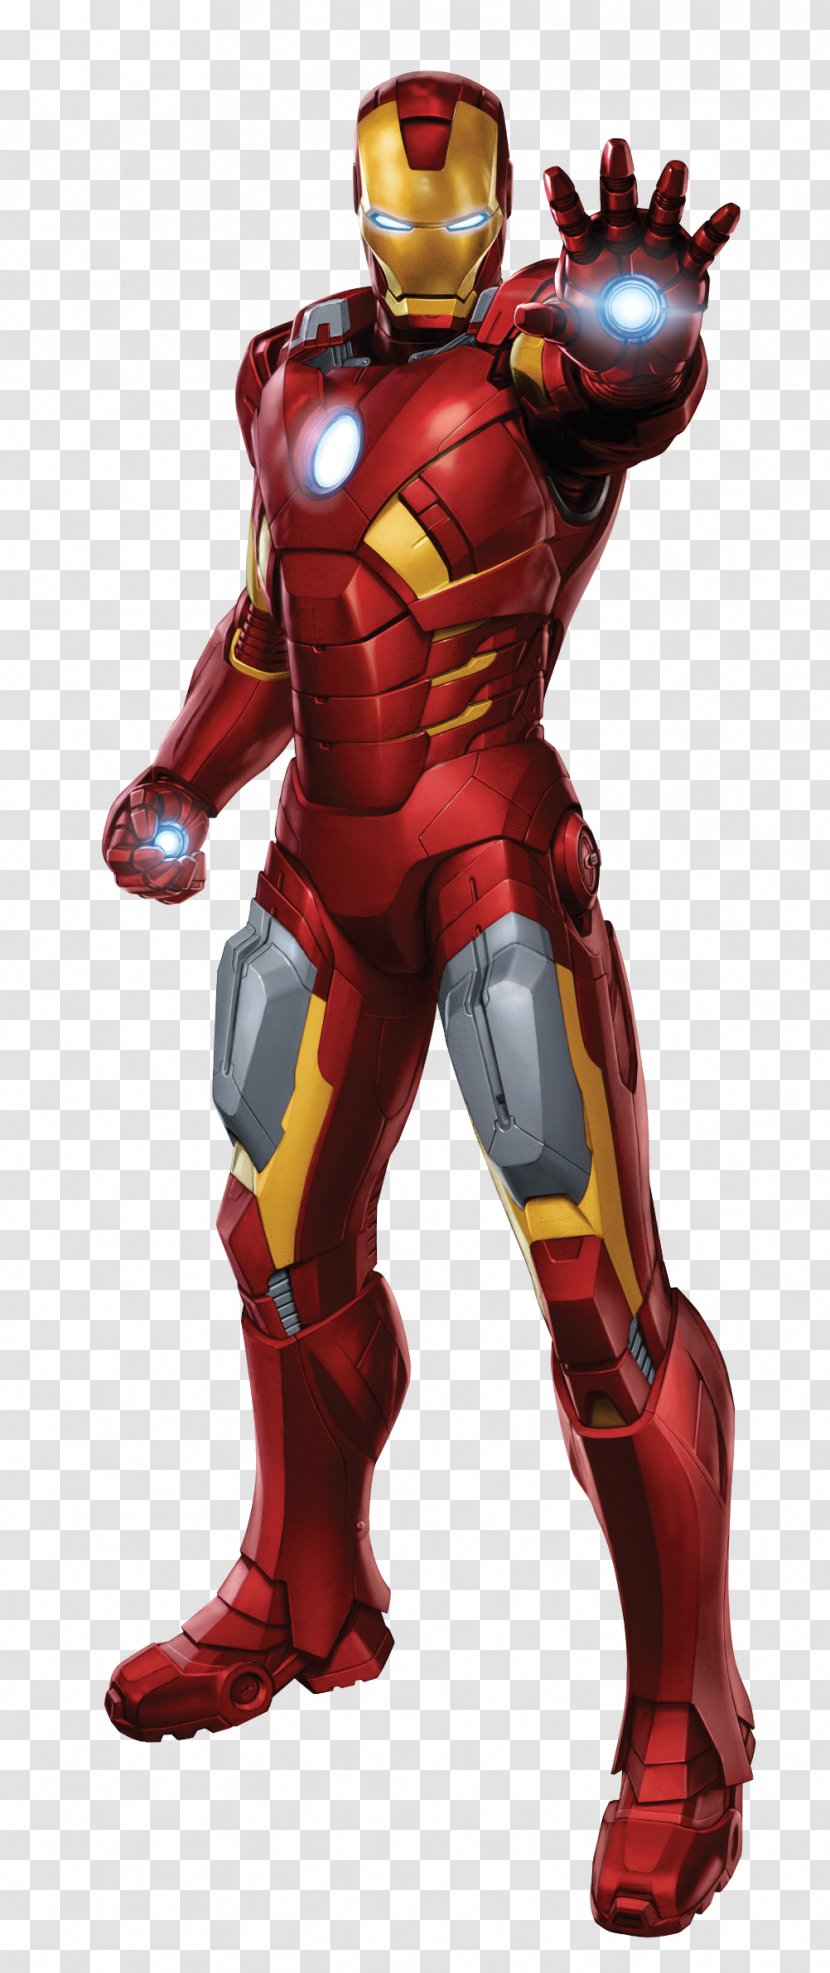 Iron Man Clint Barton Captain America Marvel Cinematic Universe Film - 3 - Ironman Transparent PNG